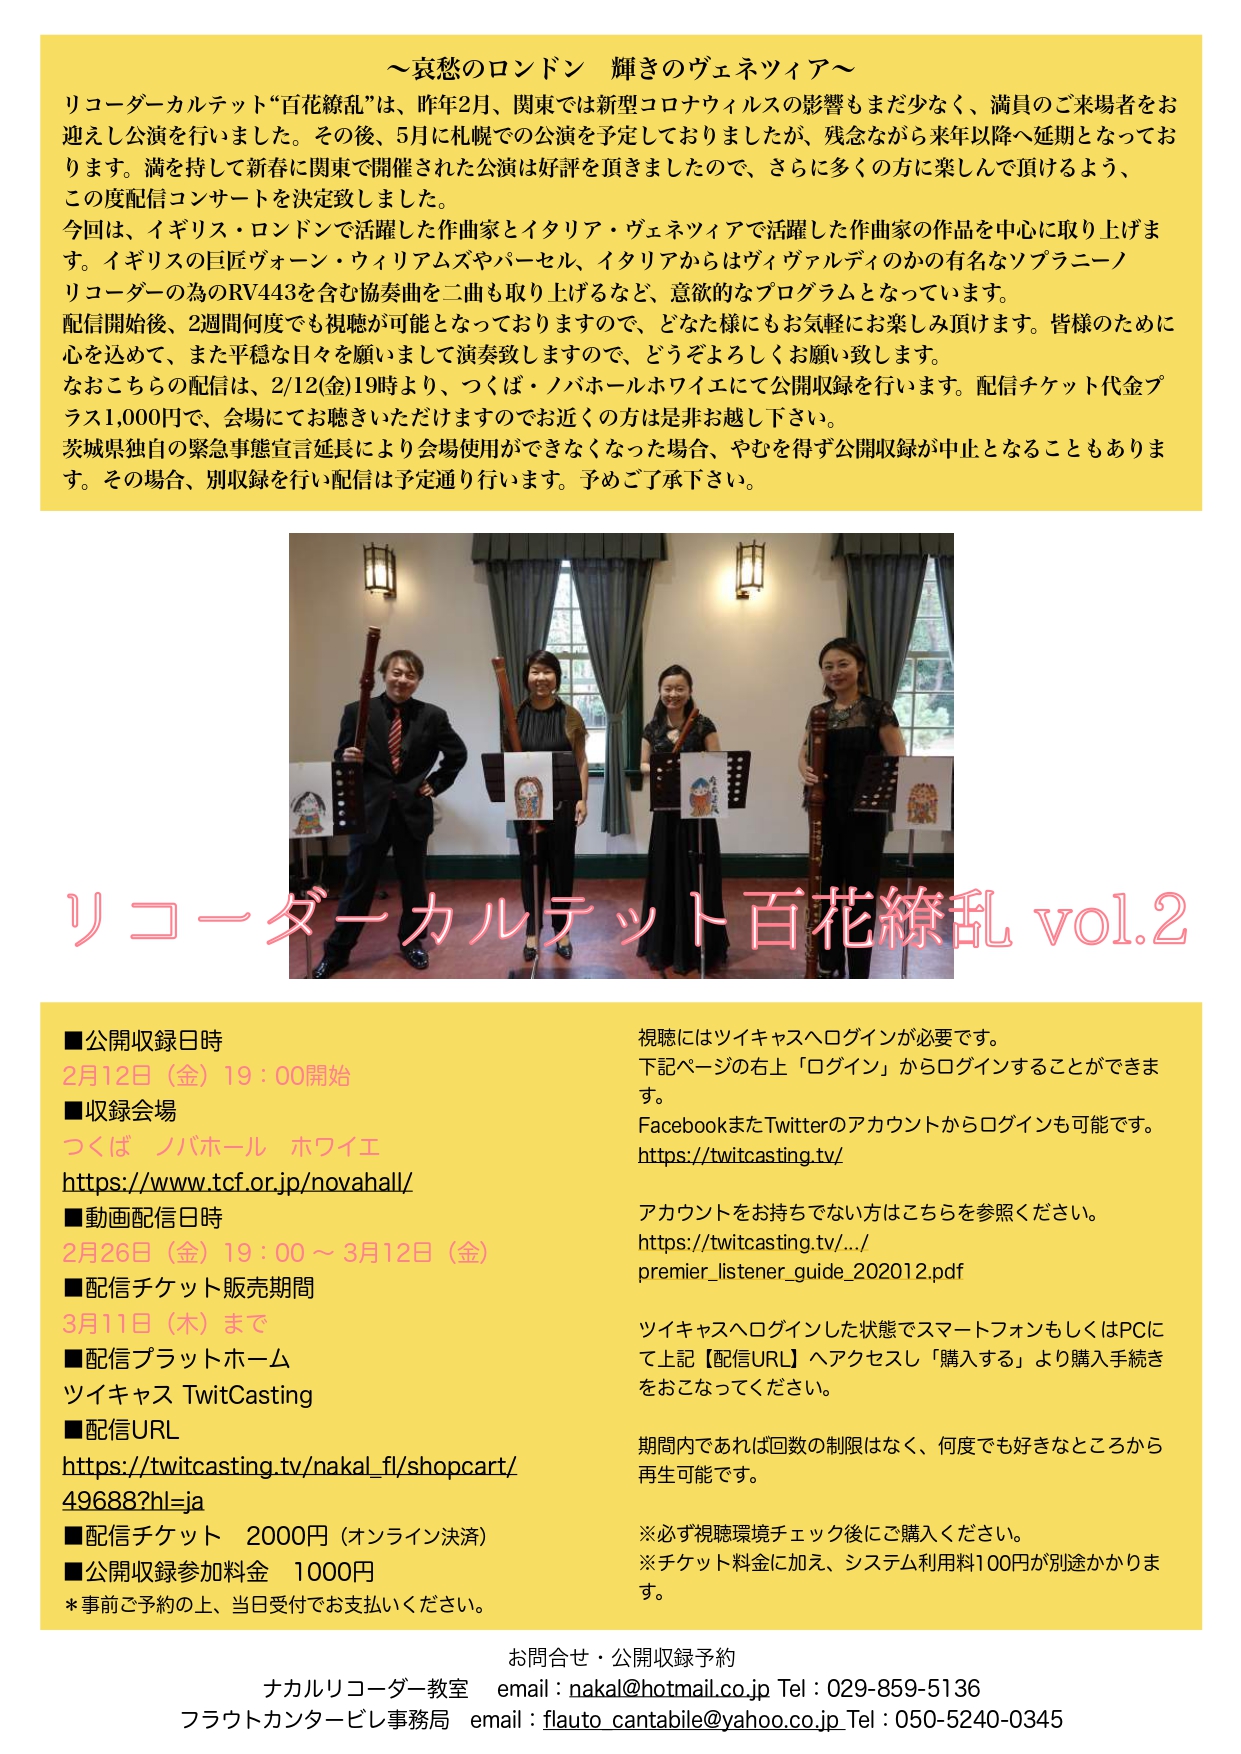 百花繚乱公開収録PDF-comp (1)_page-0001